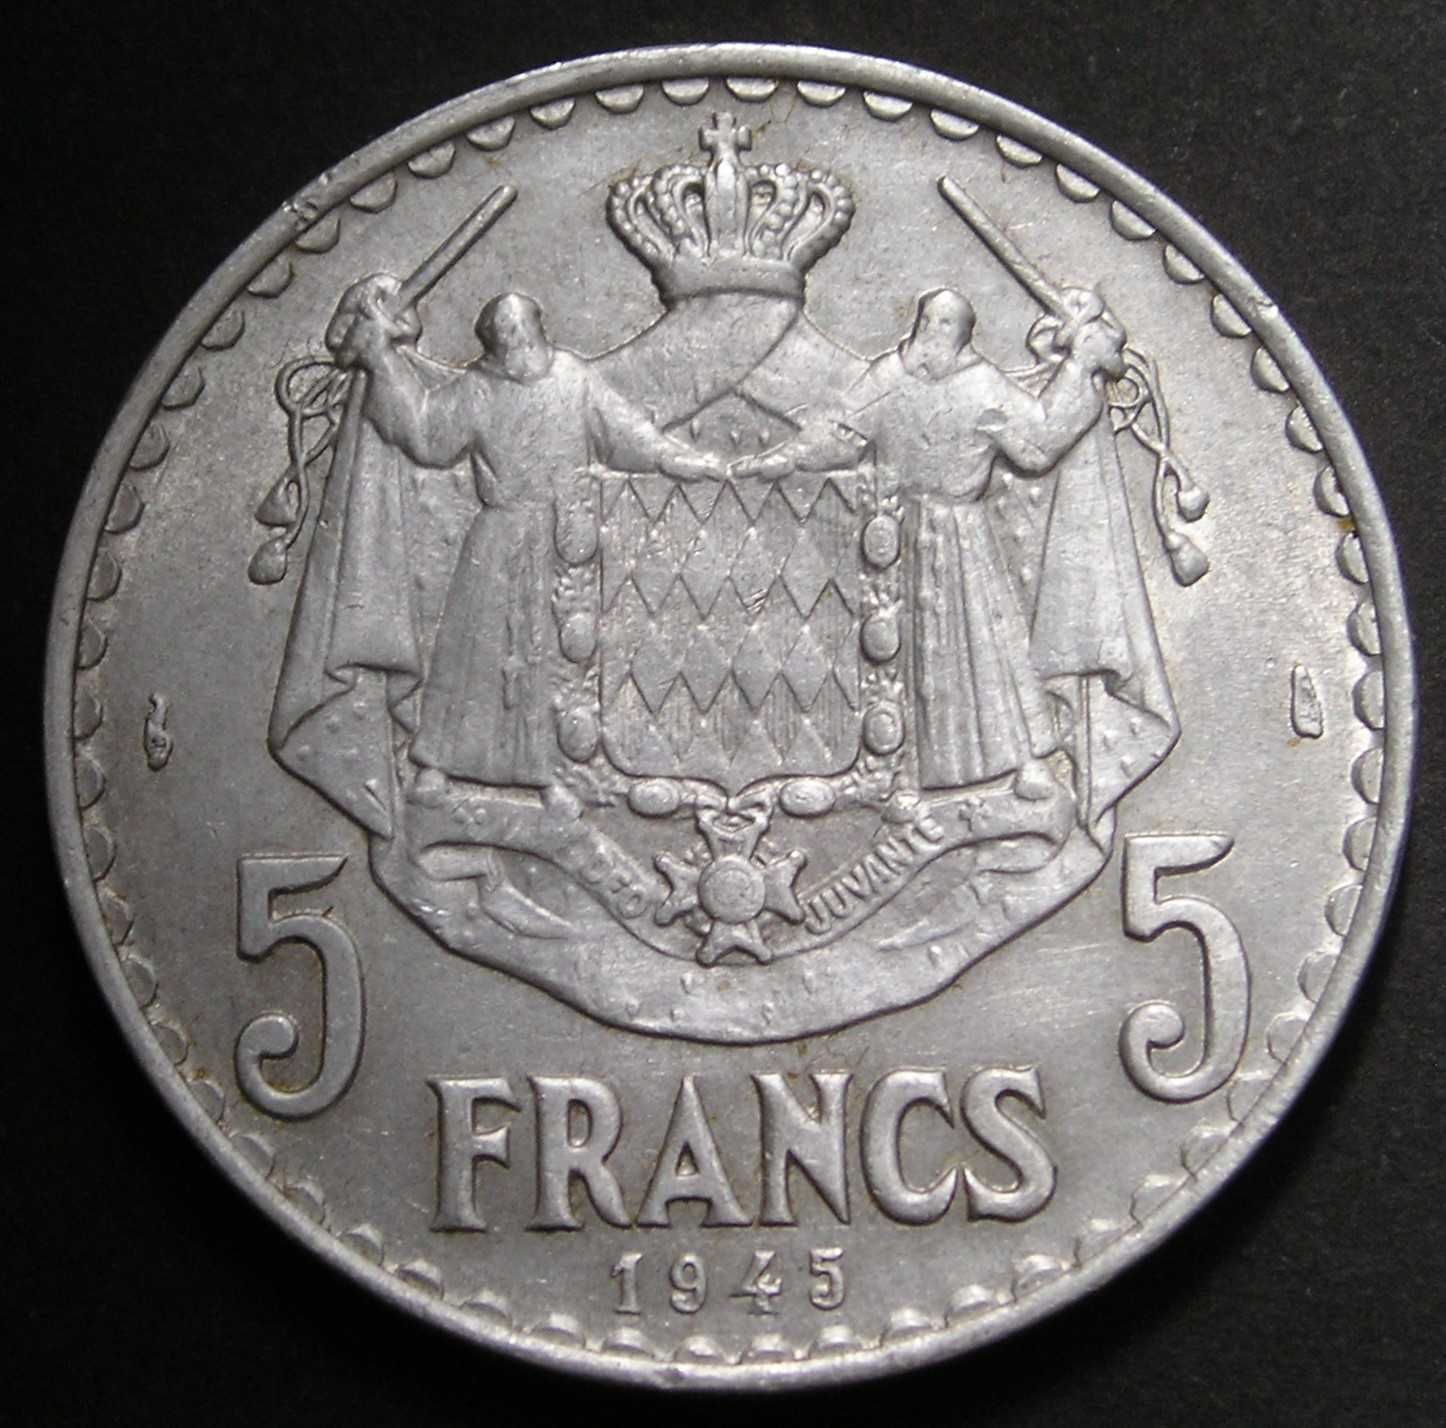 Monako 5 franków 1945 - Ludwik II